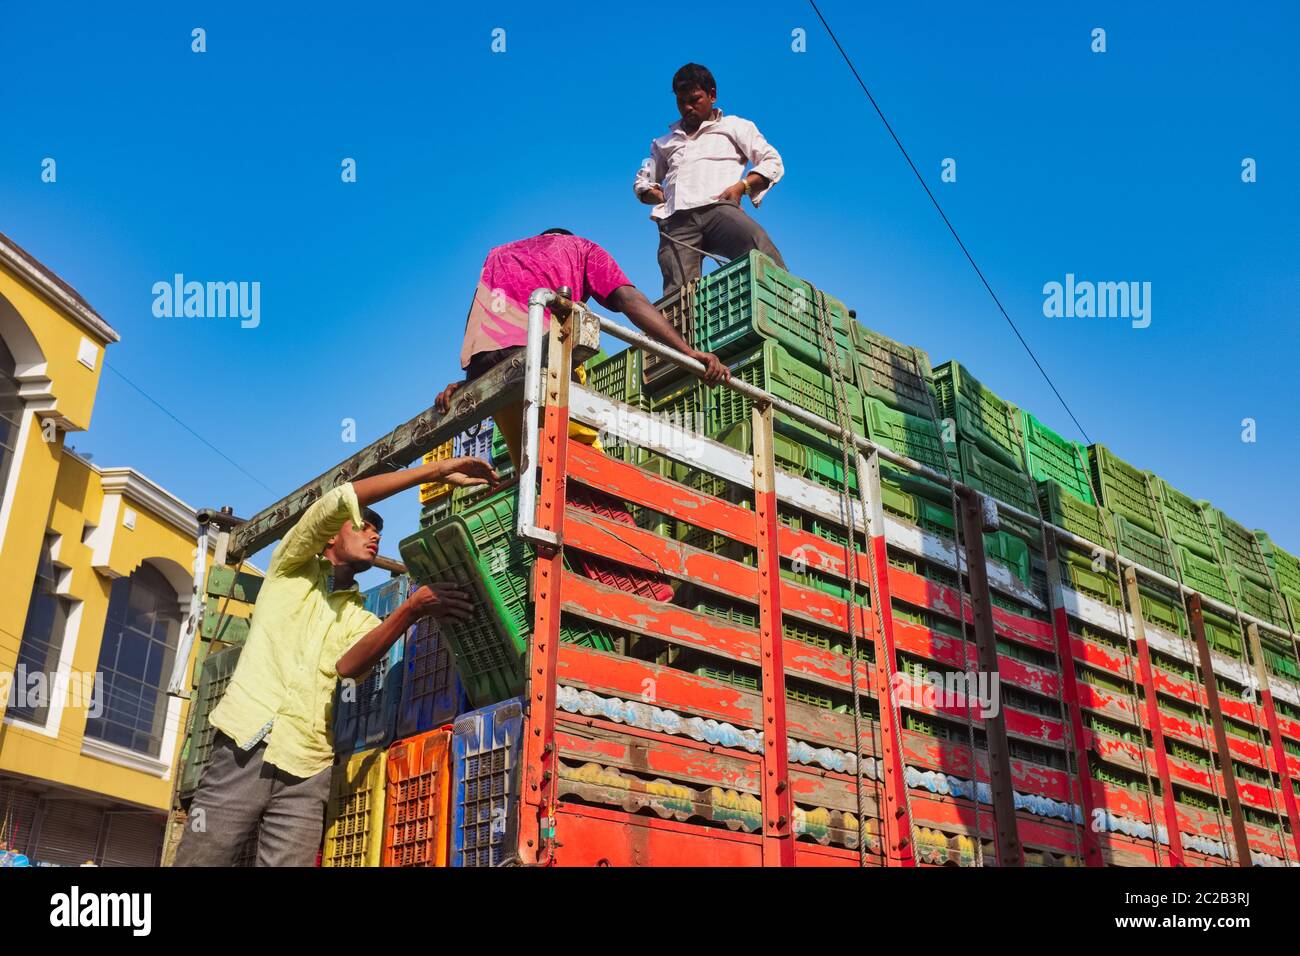 Employees of a trucking company loading a truck, against a deep blue, sunny sky; Mumbai, India Stock Photo